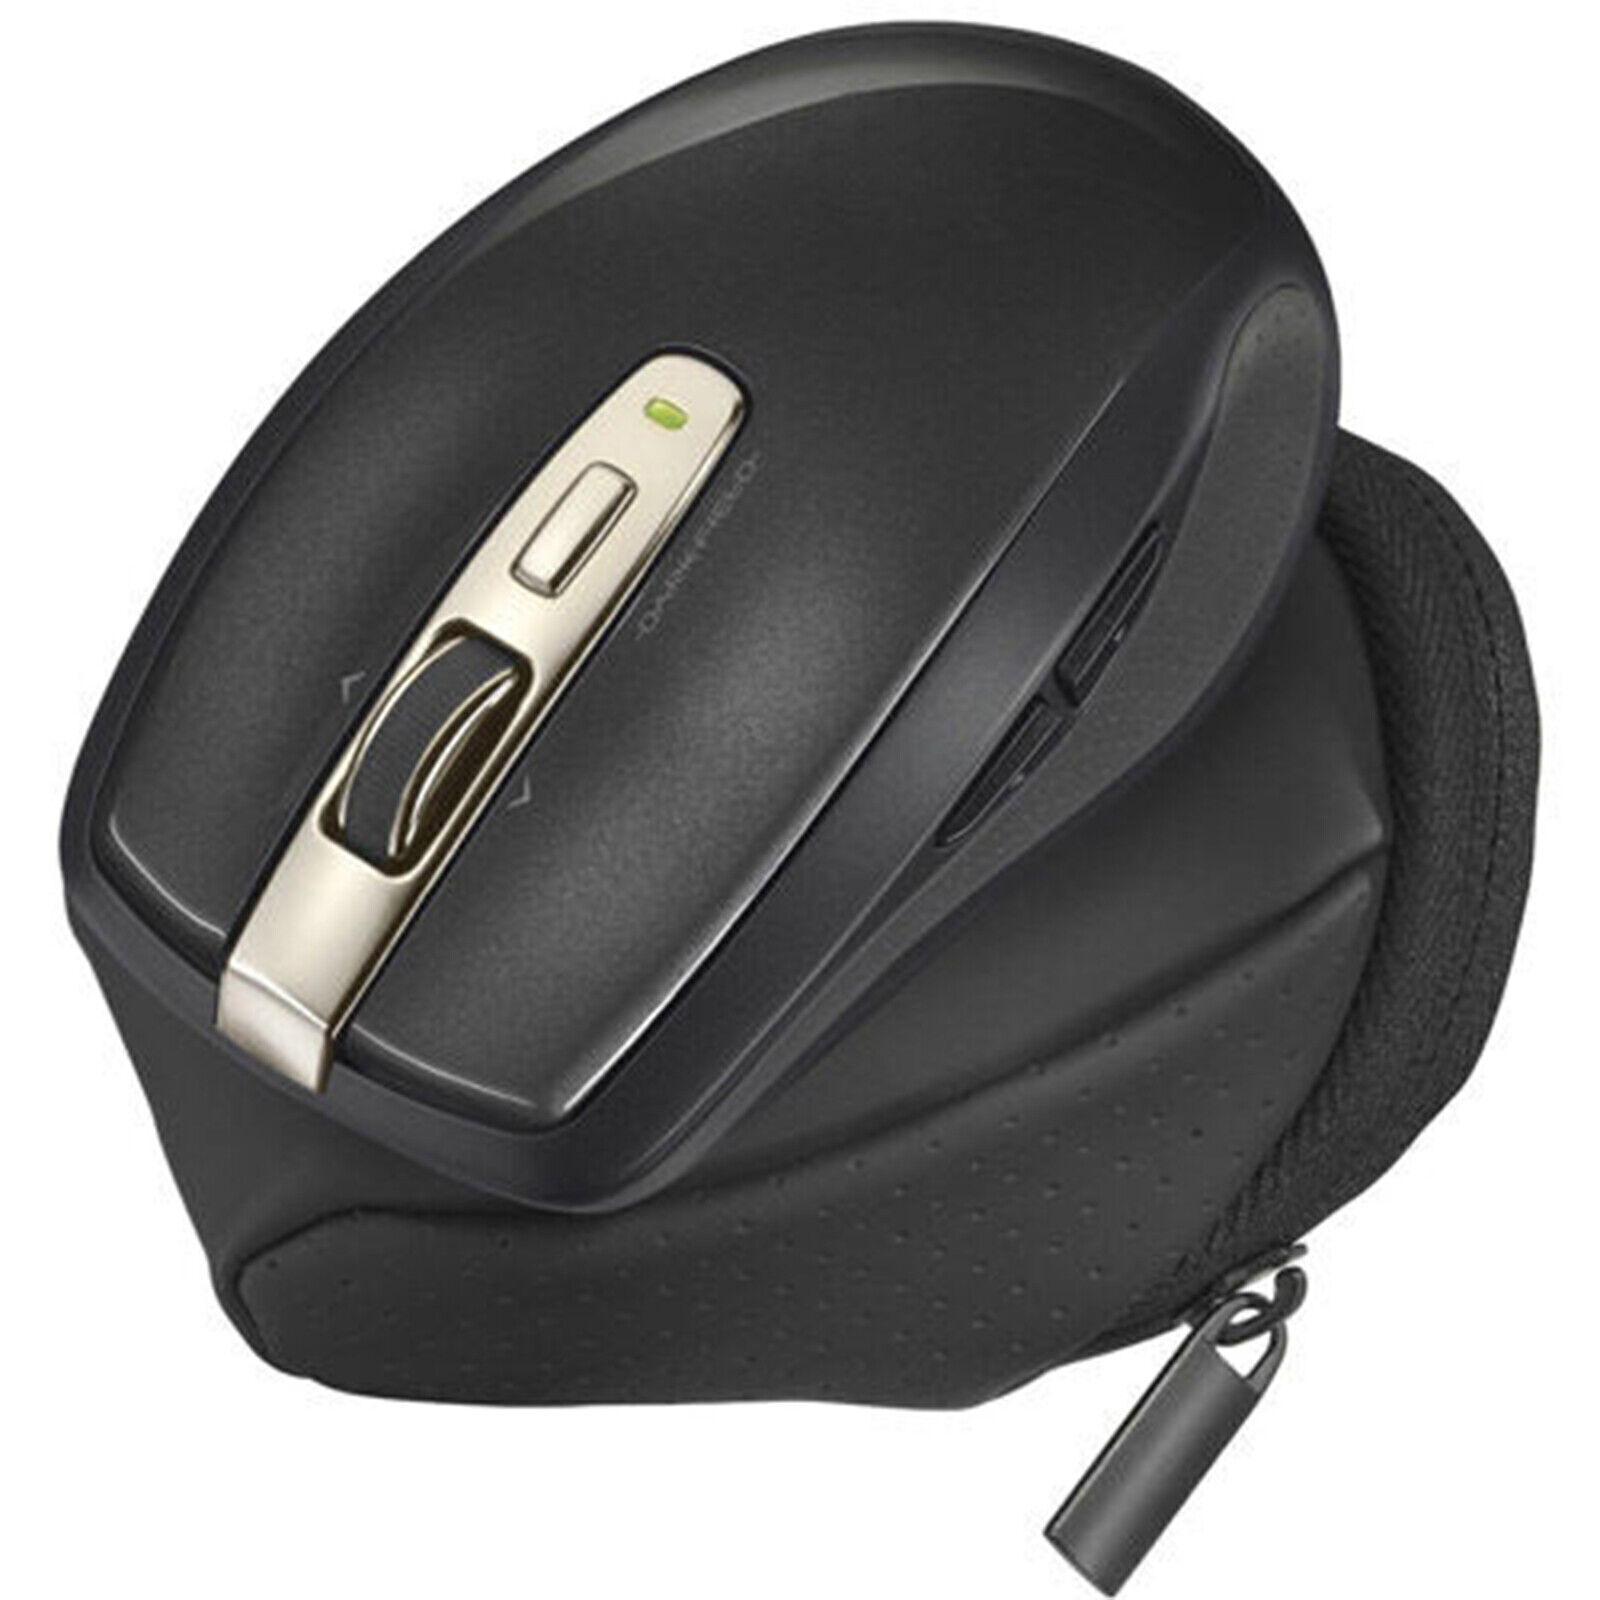 Portable Mouse Storage Bag Case for Logitech M905 M325 M235 M305 M215 V470 V550